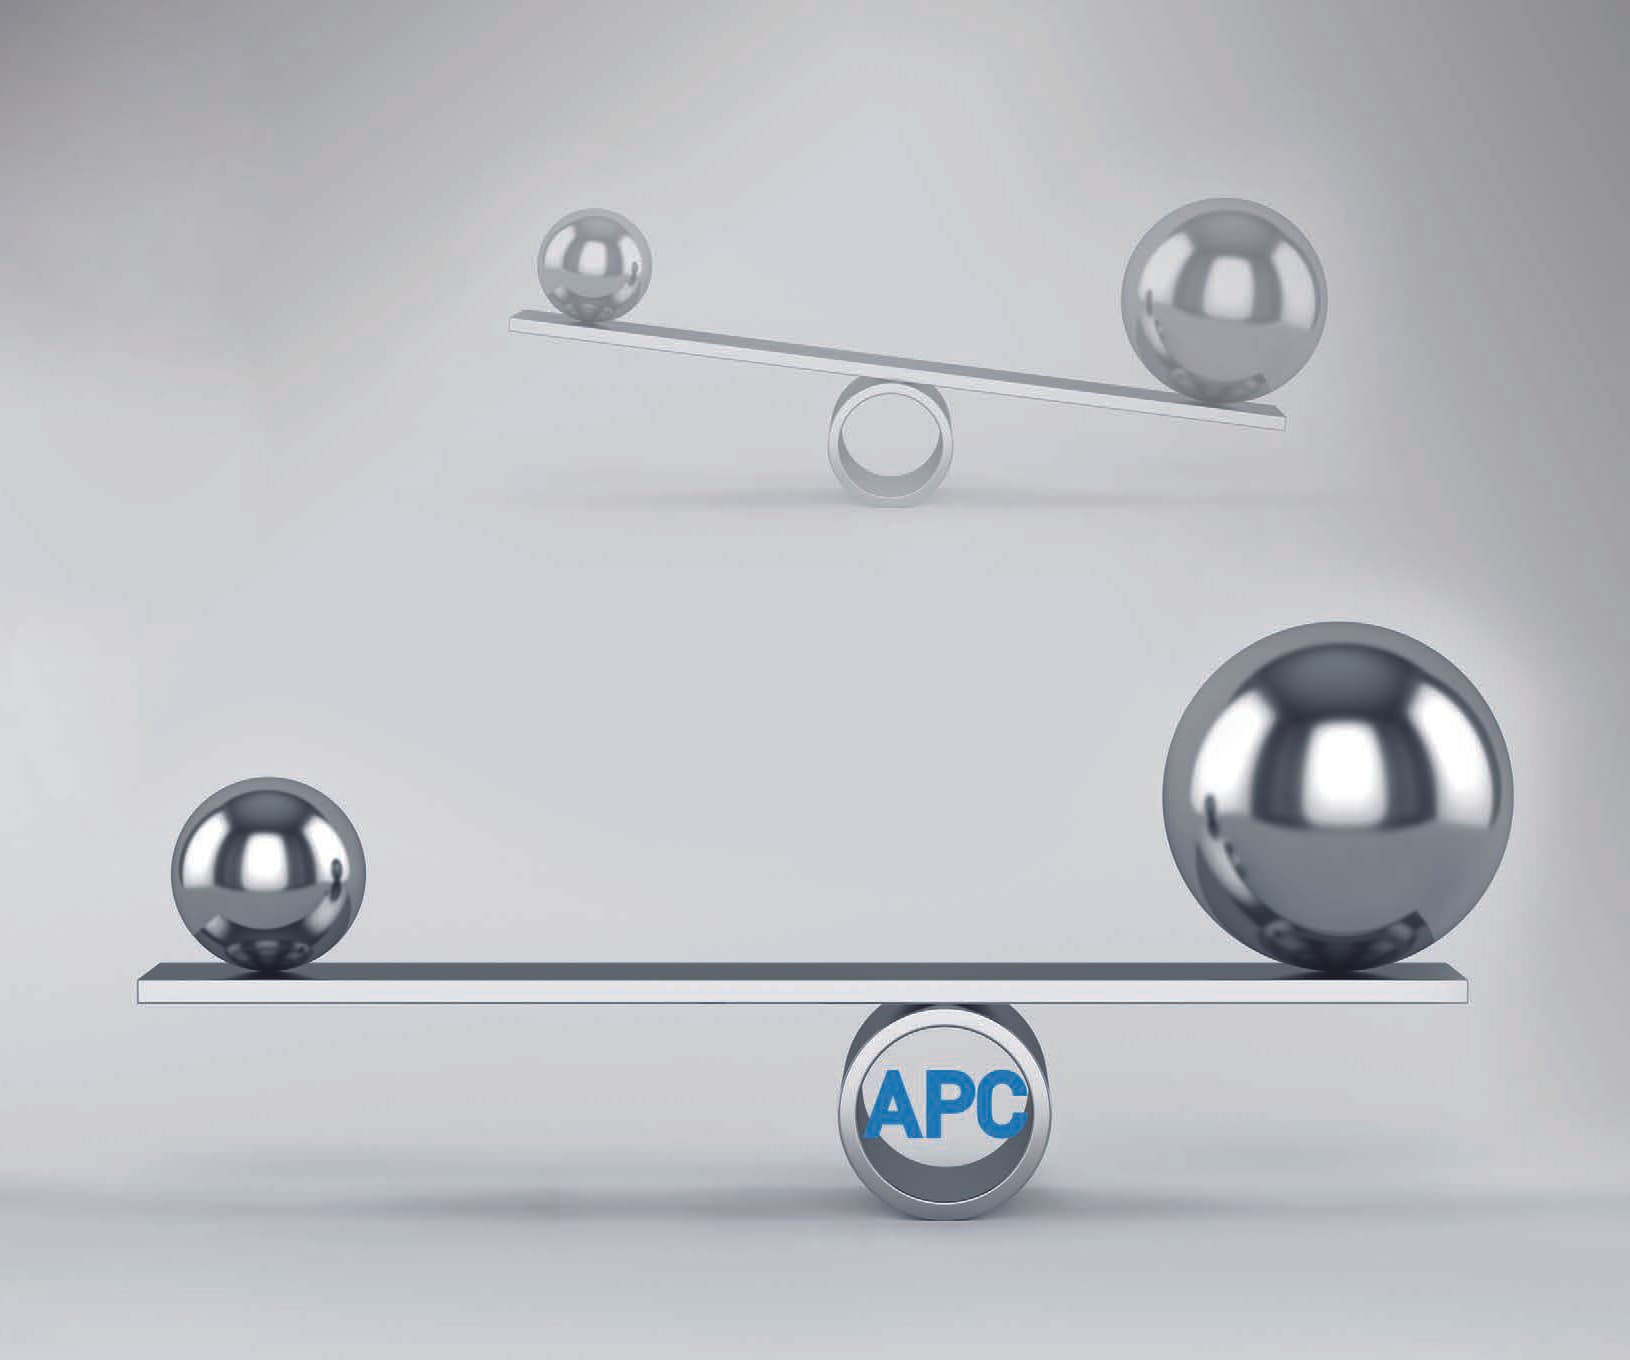 APC stabilizes processes and maximizes profits